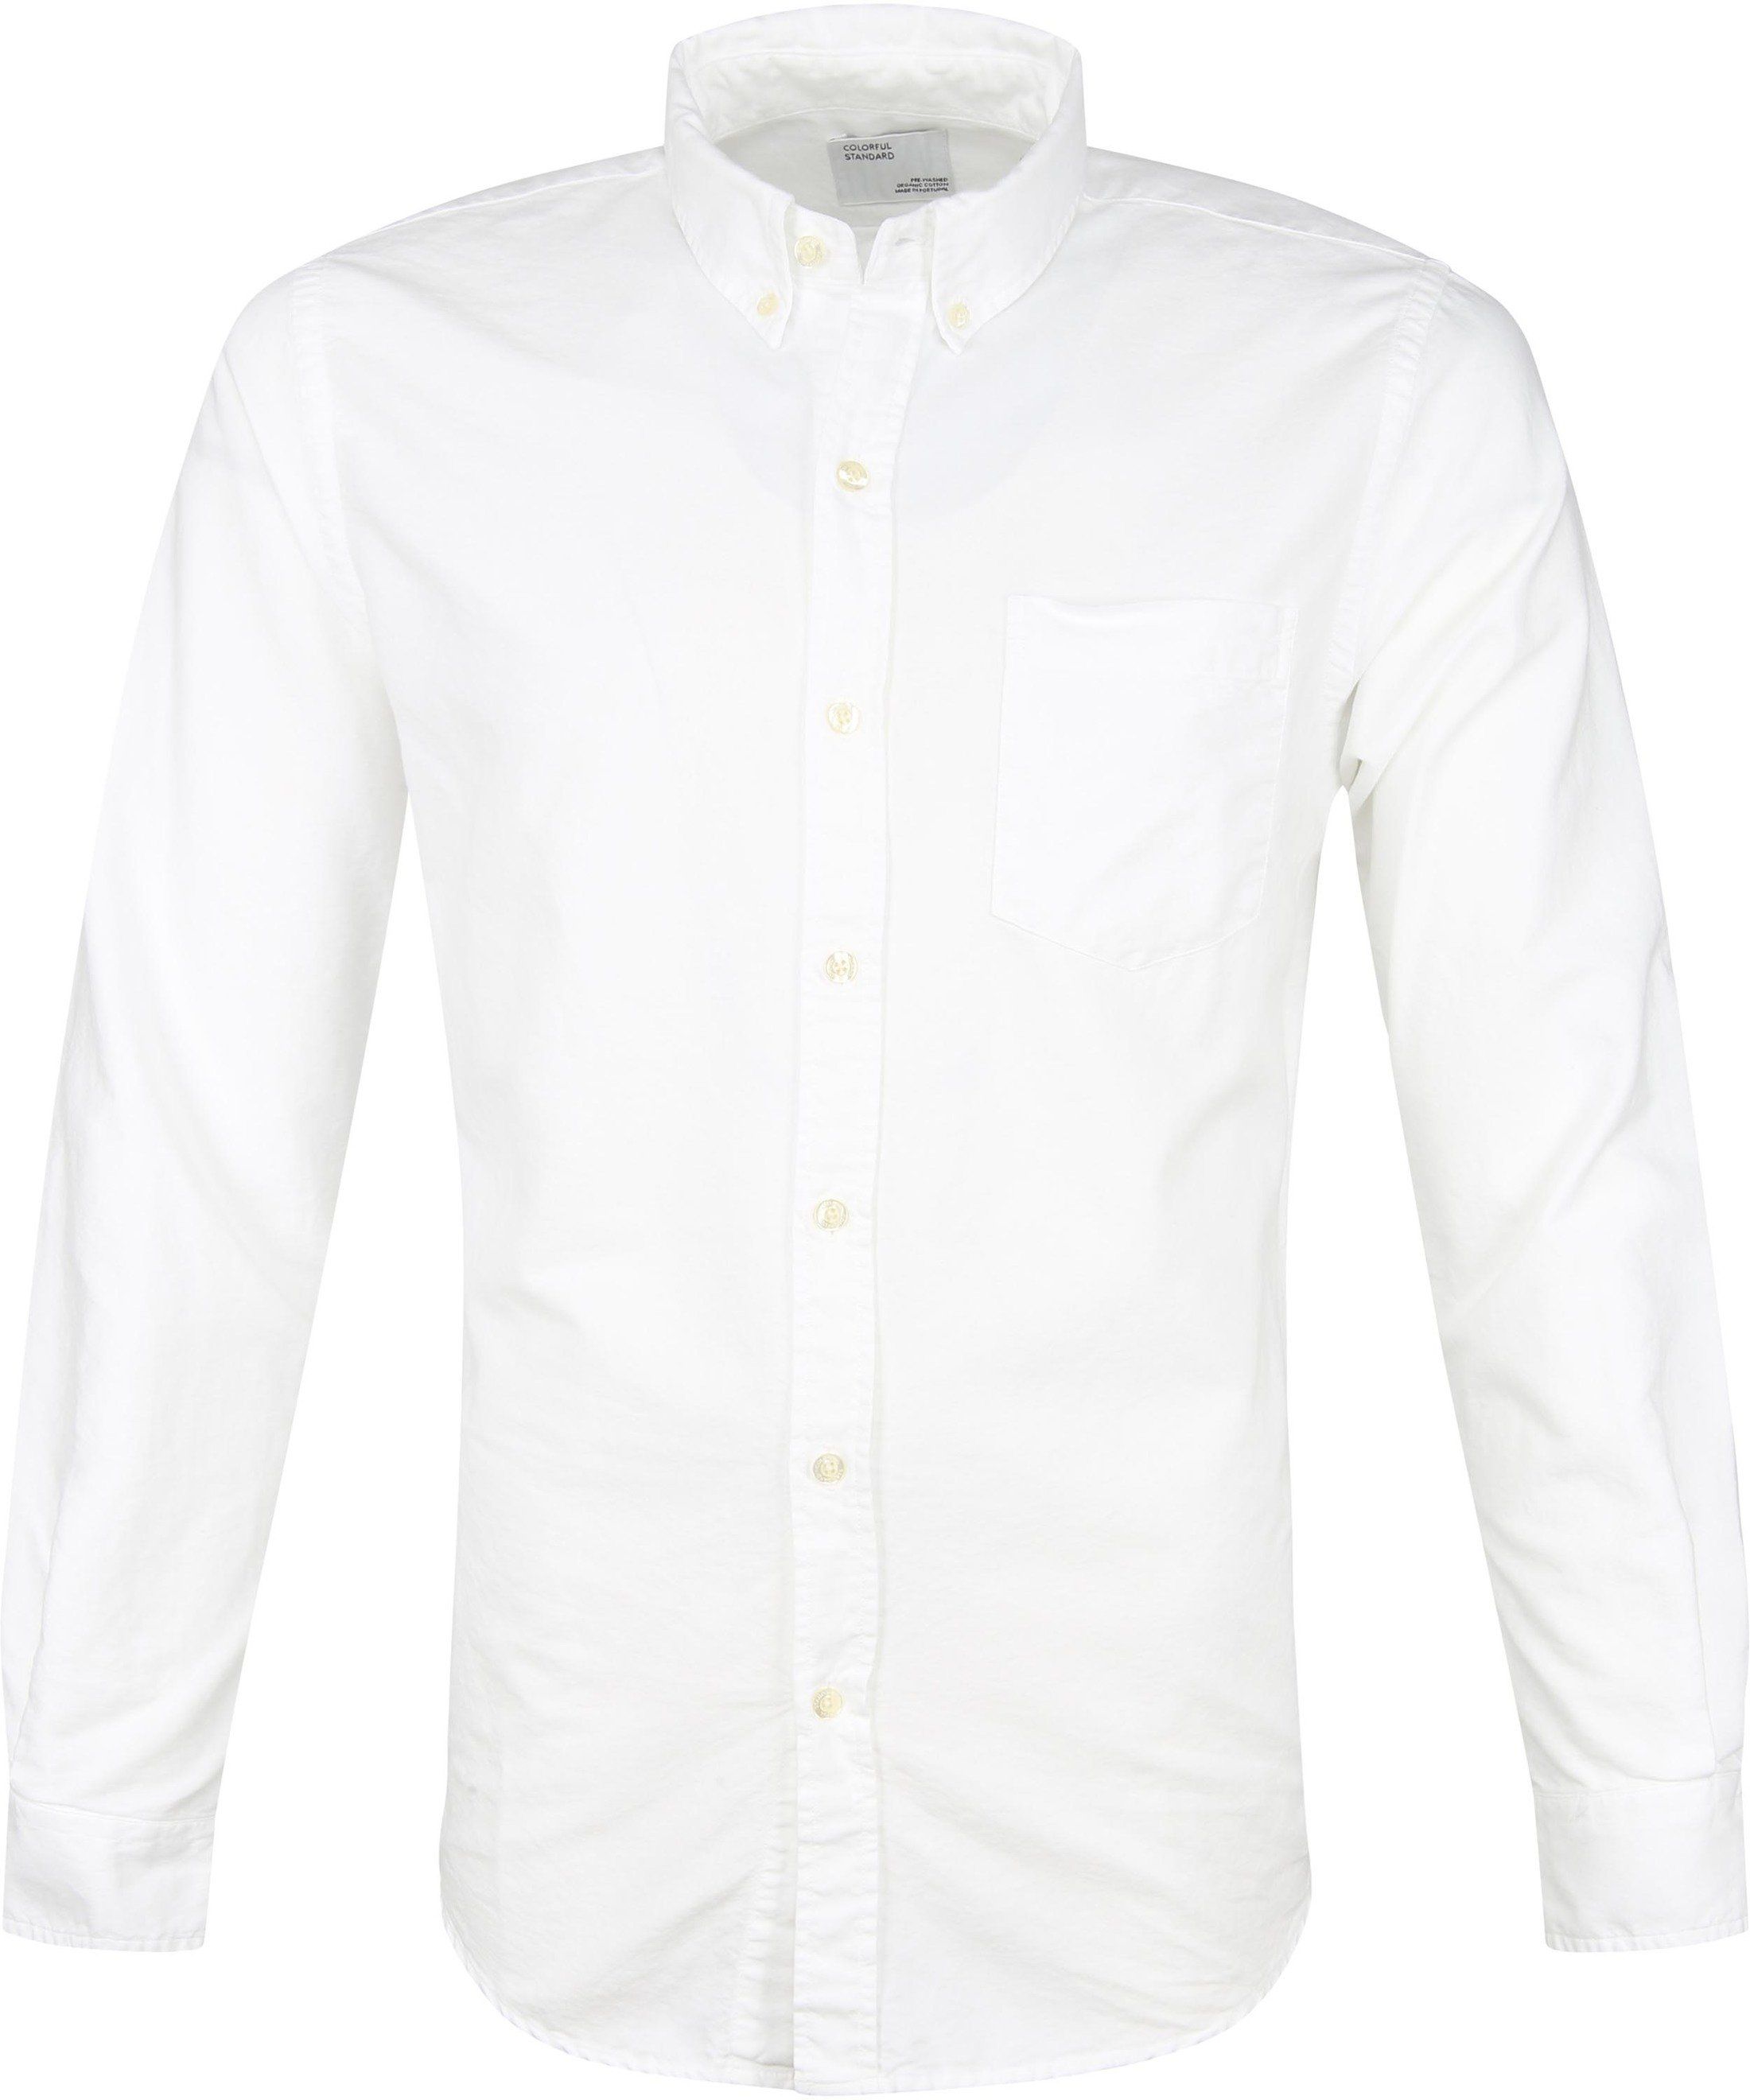 Colorful Standard Shirt White size M